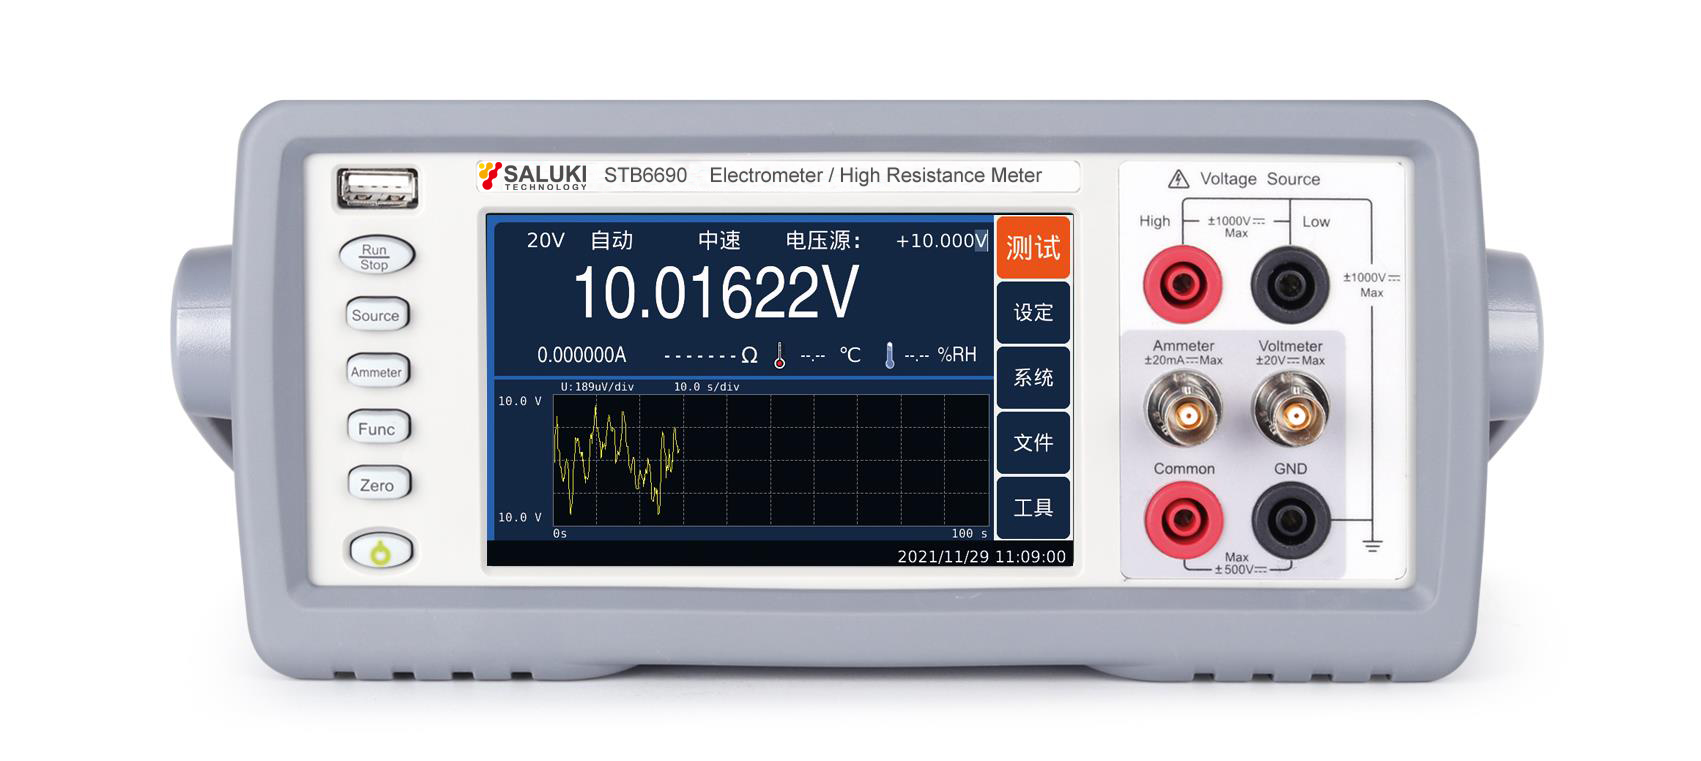 STB6690 Series fA meter/pA meter/Electrometer/High Resistance Meter